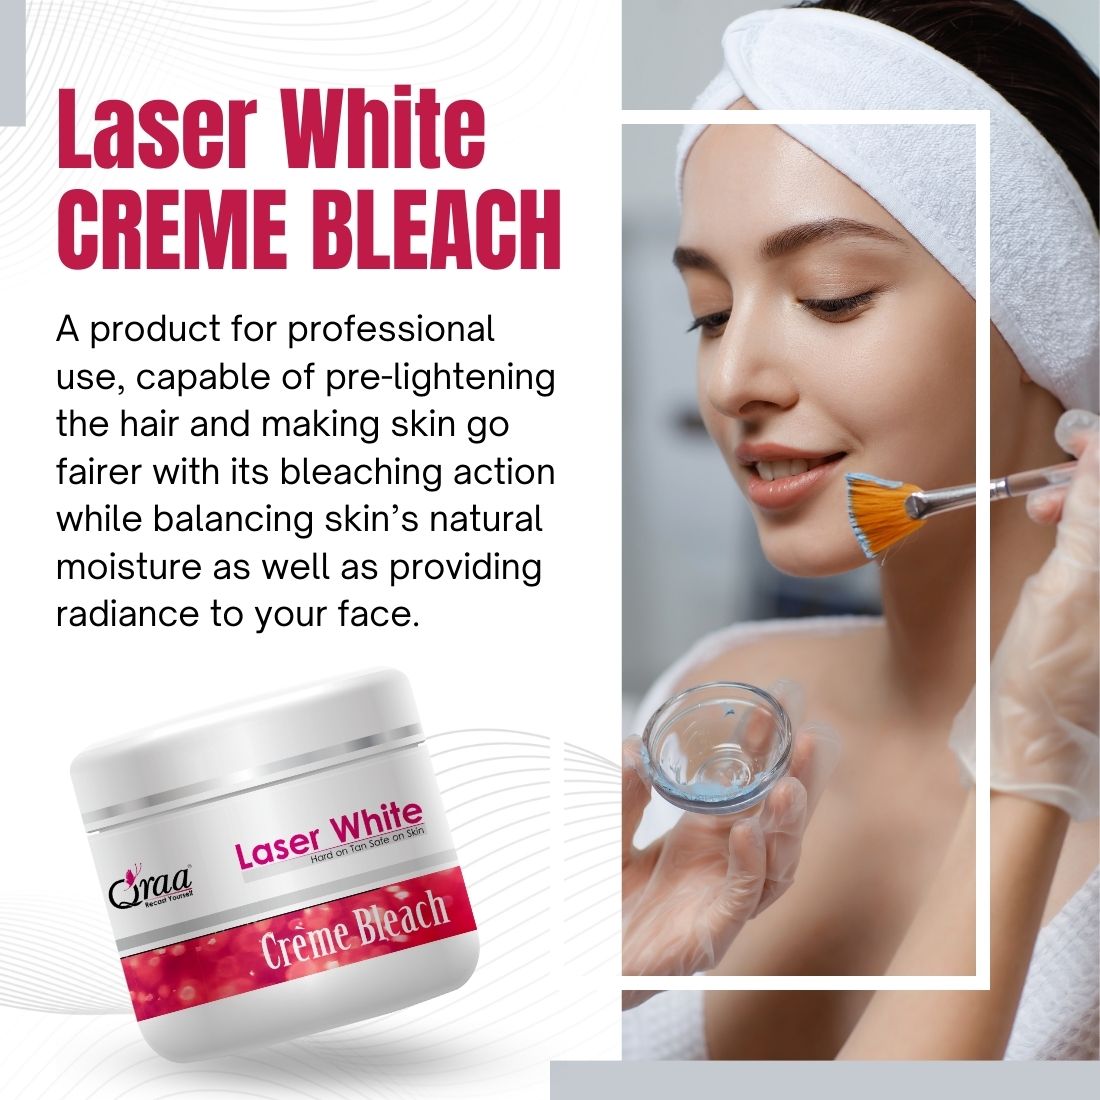 Qraa Laser White Creme Bleach Kit